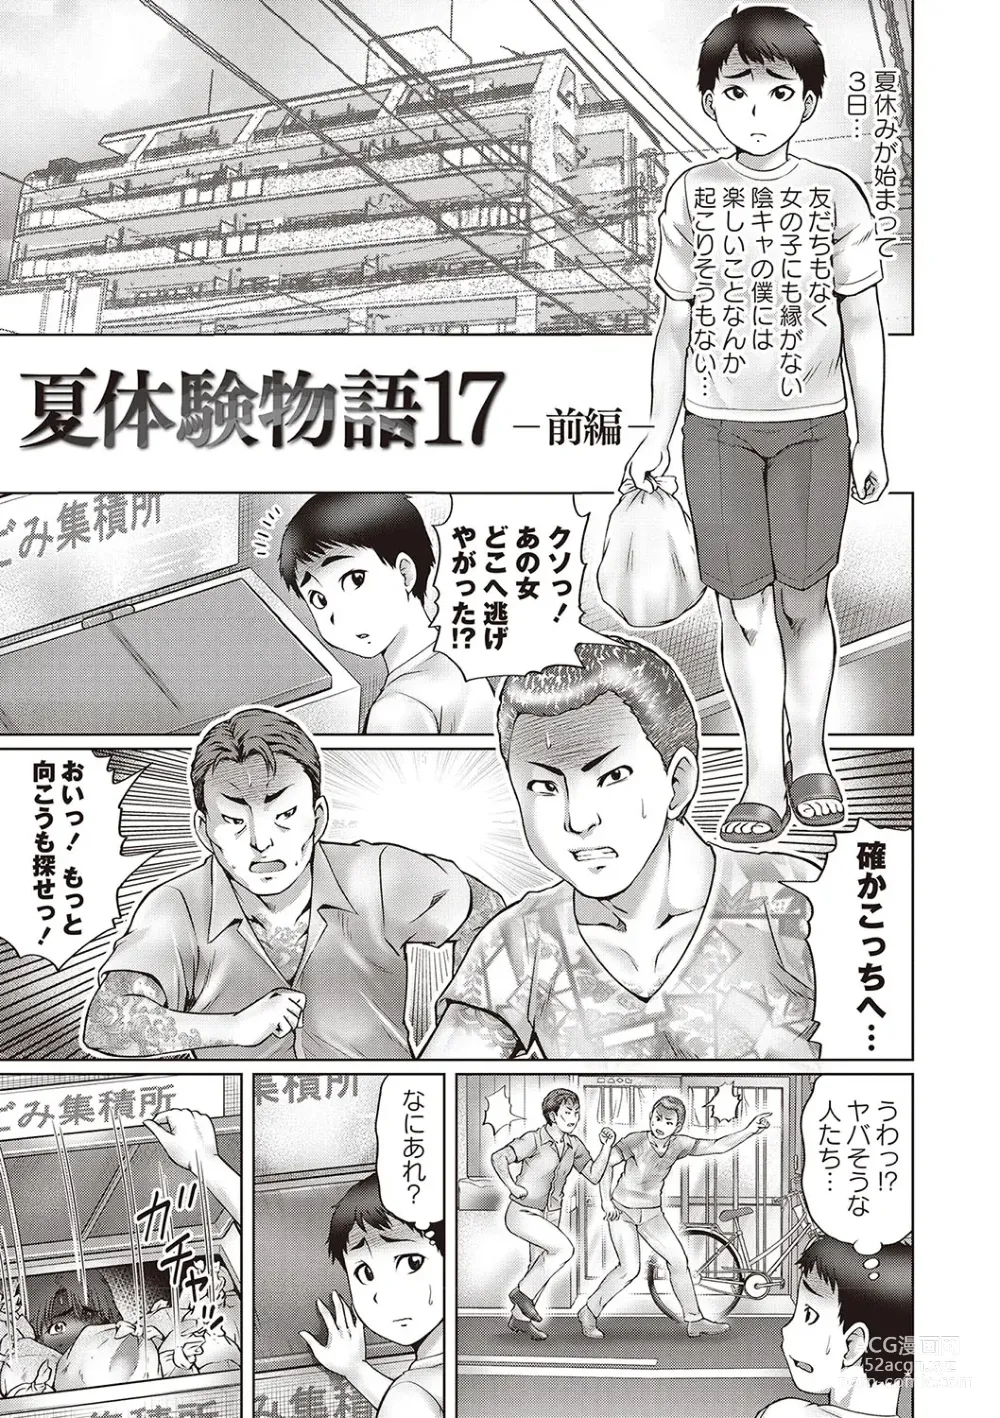 Page 4 of manga Doutei Revenge SEX